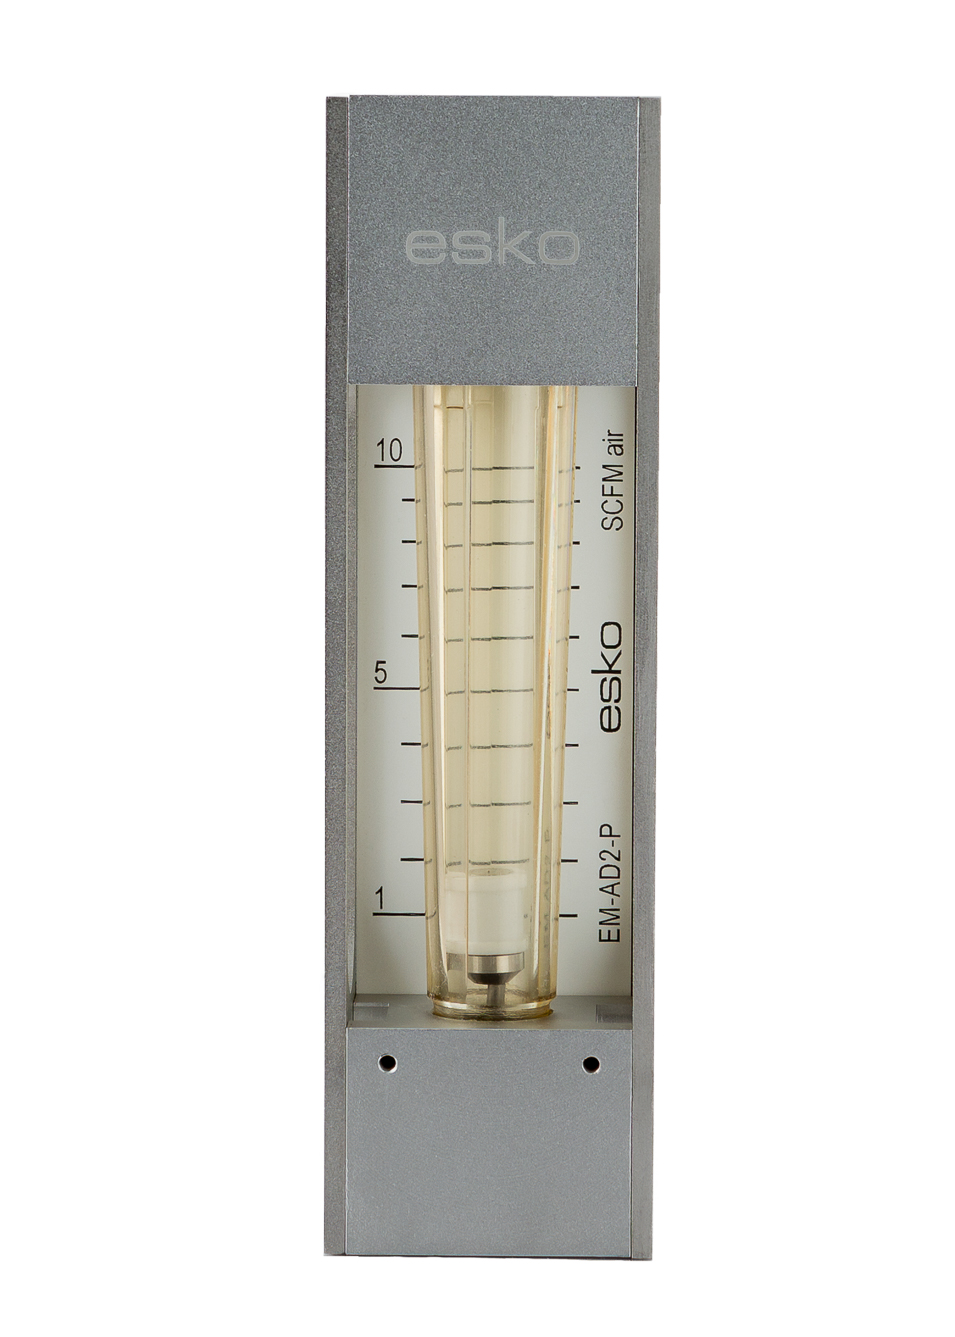 ESKO Model EM Medium Range Flow meter